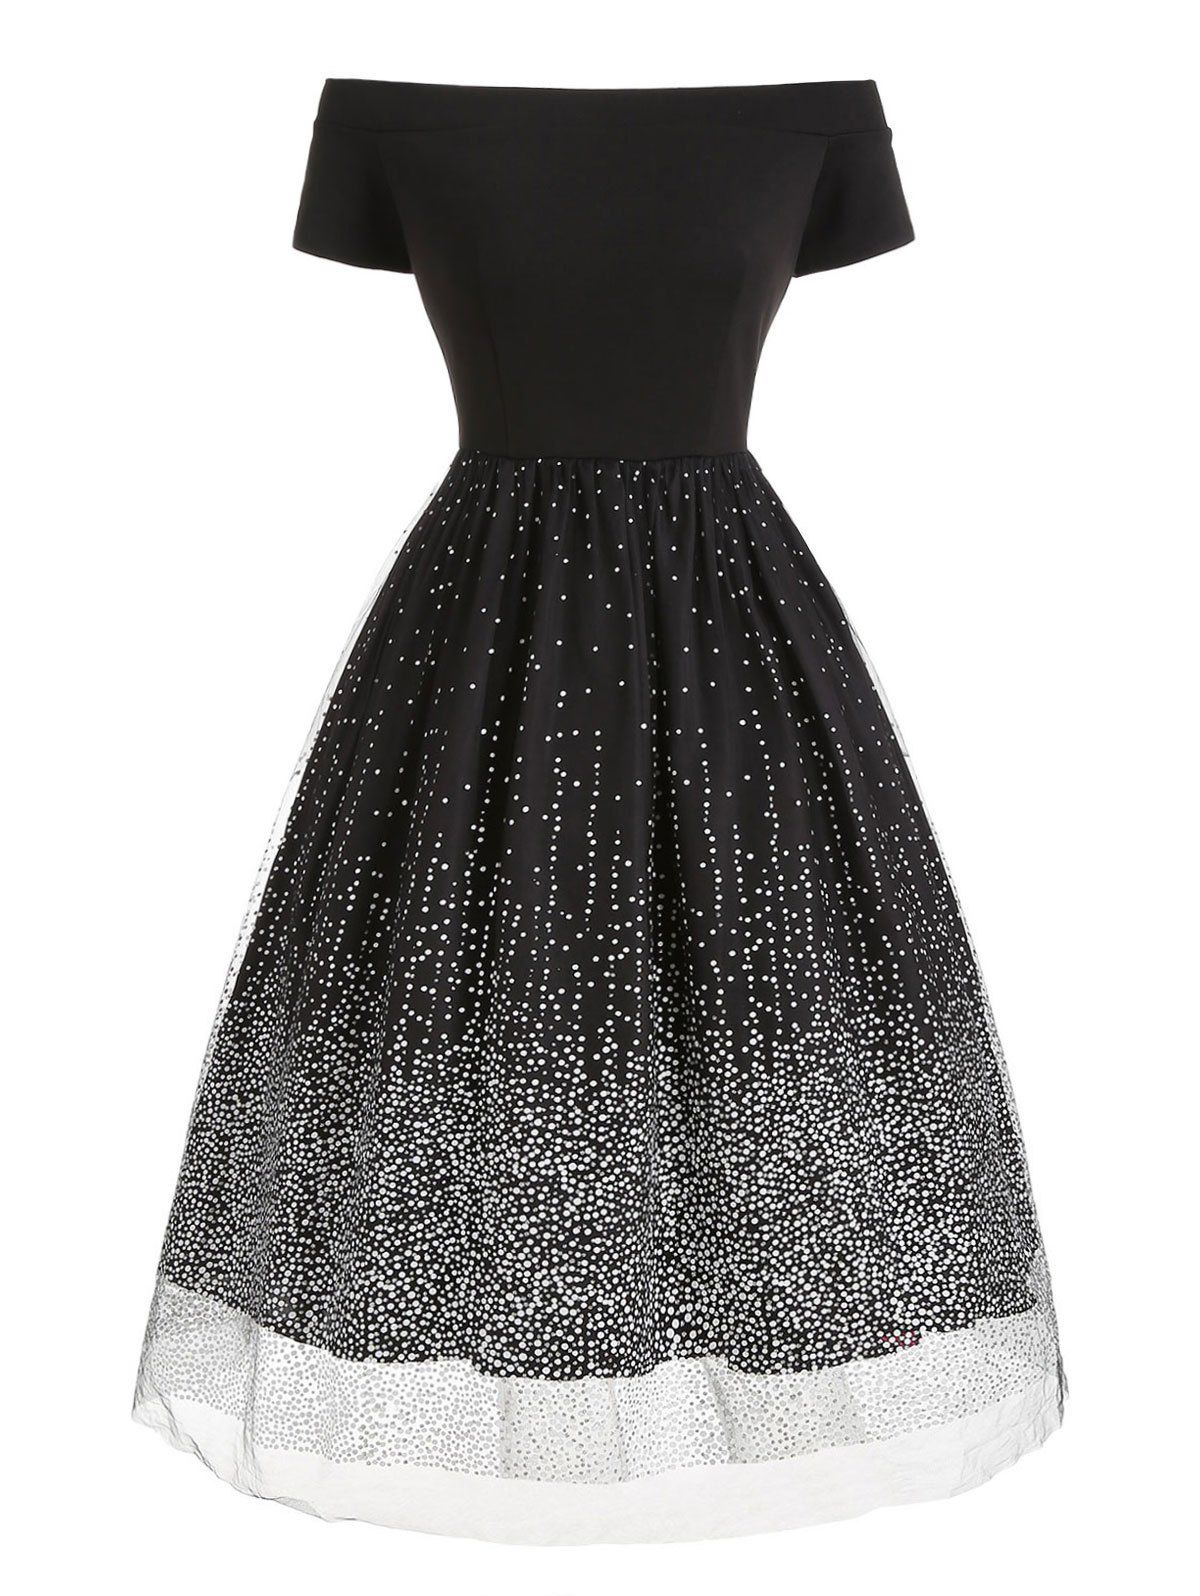 Short Sleeve Snow Print Flare Dress - BLACK 2XL